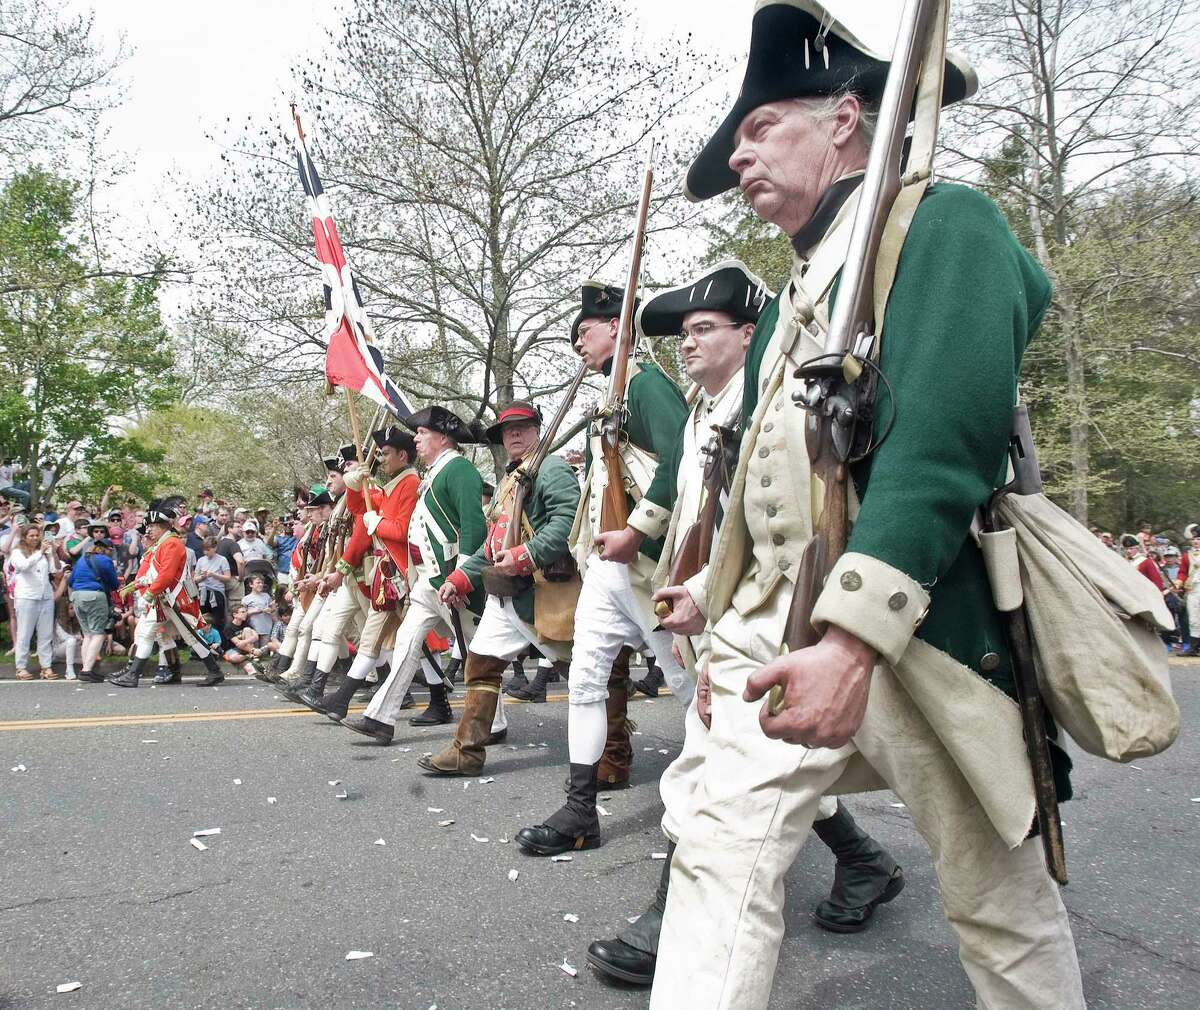 Reenactors march toward Main Street for the 240th anniversary of the Battle of Ridgefield. Saturday, April 29, 2017